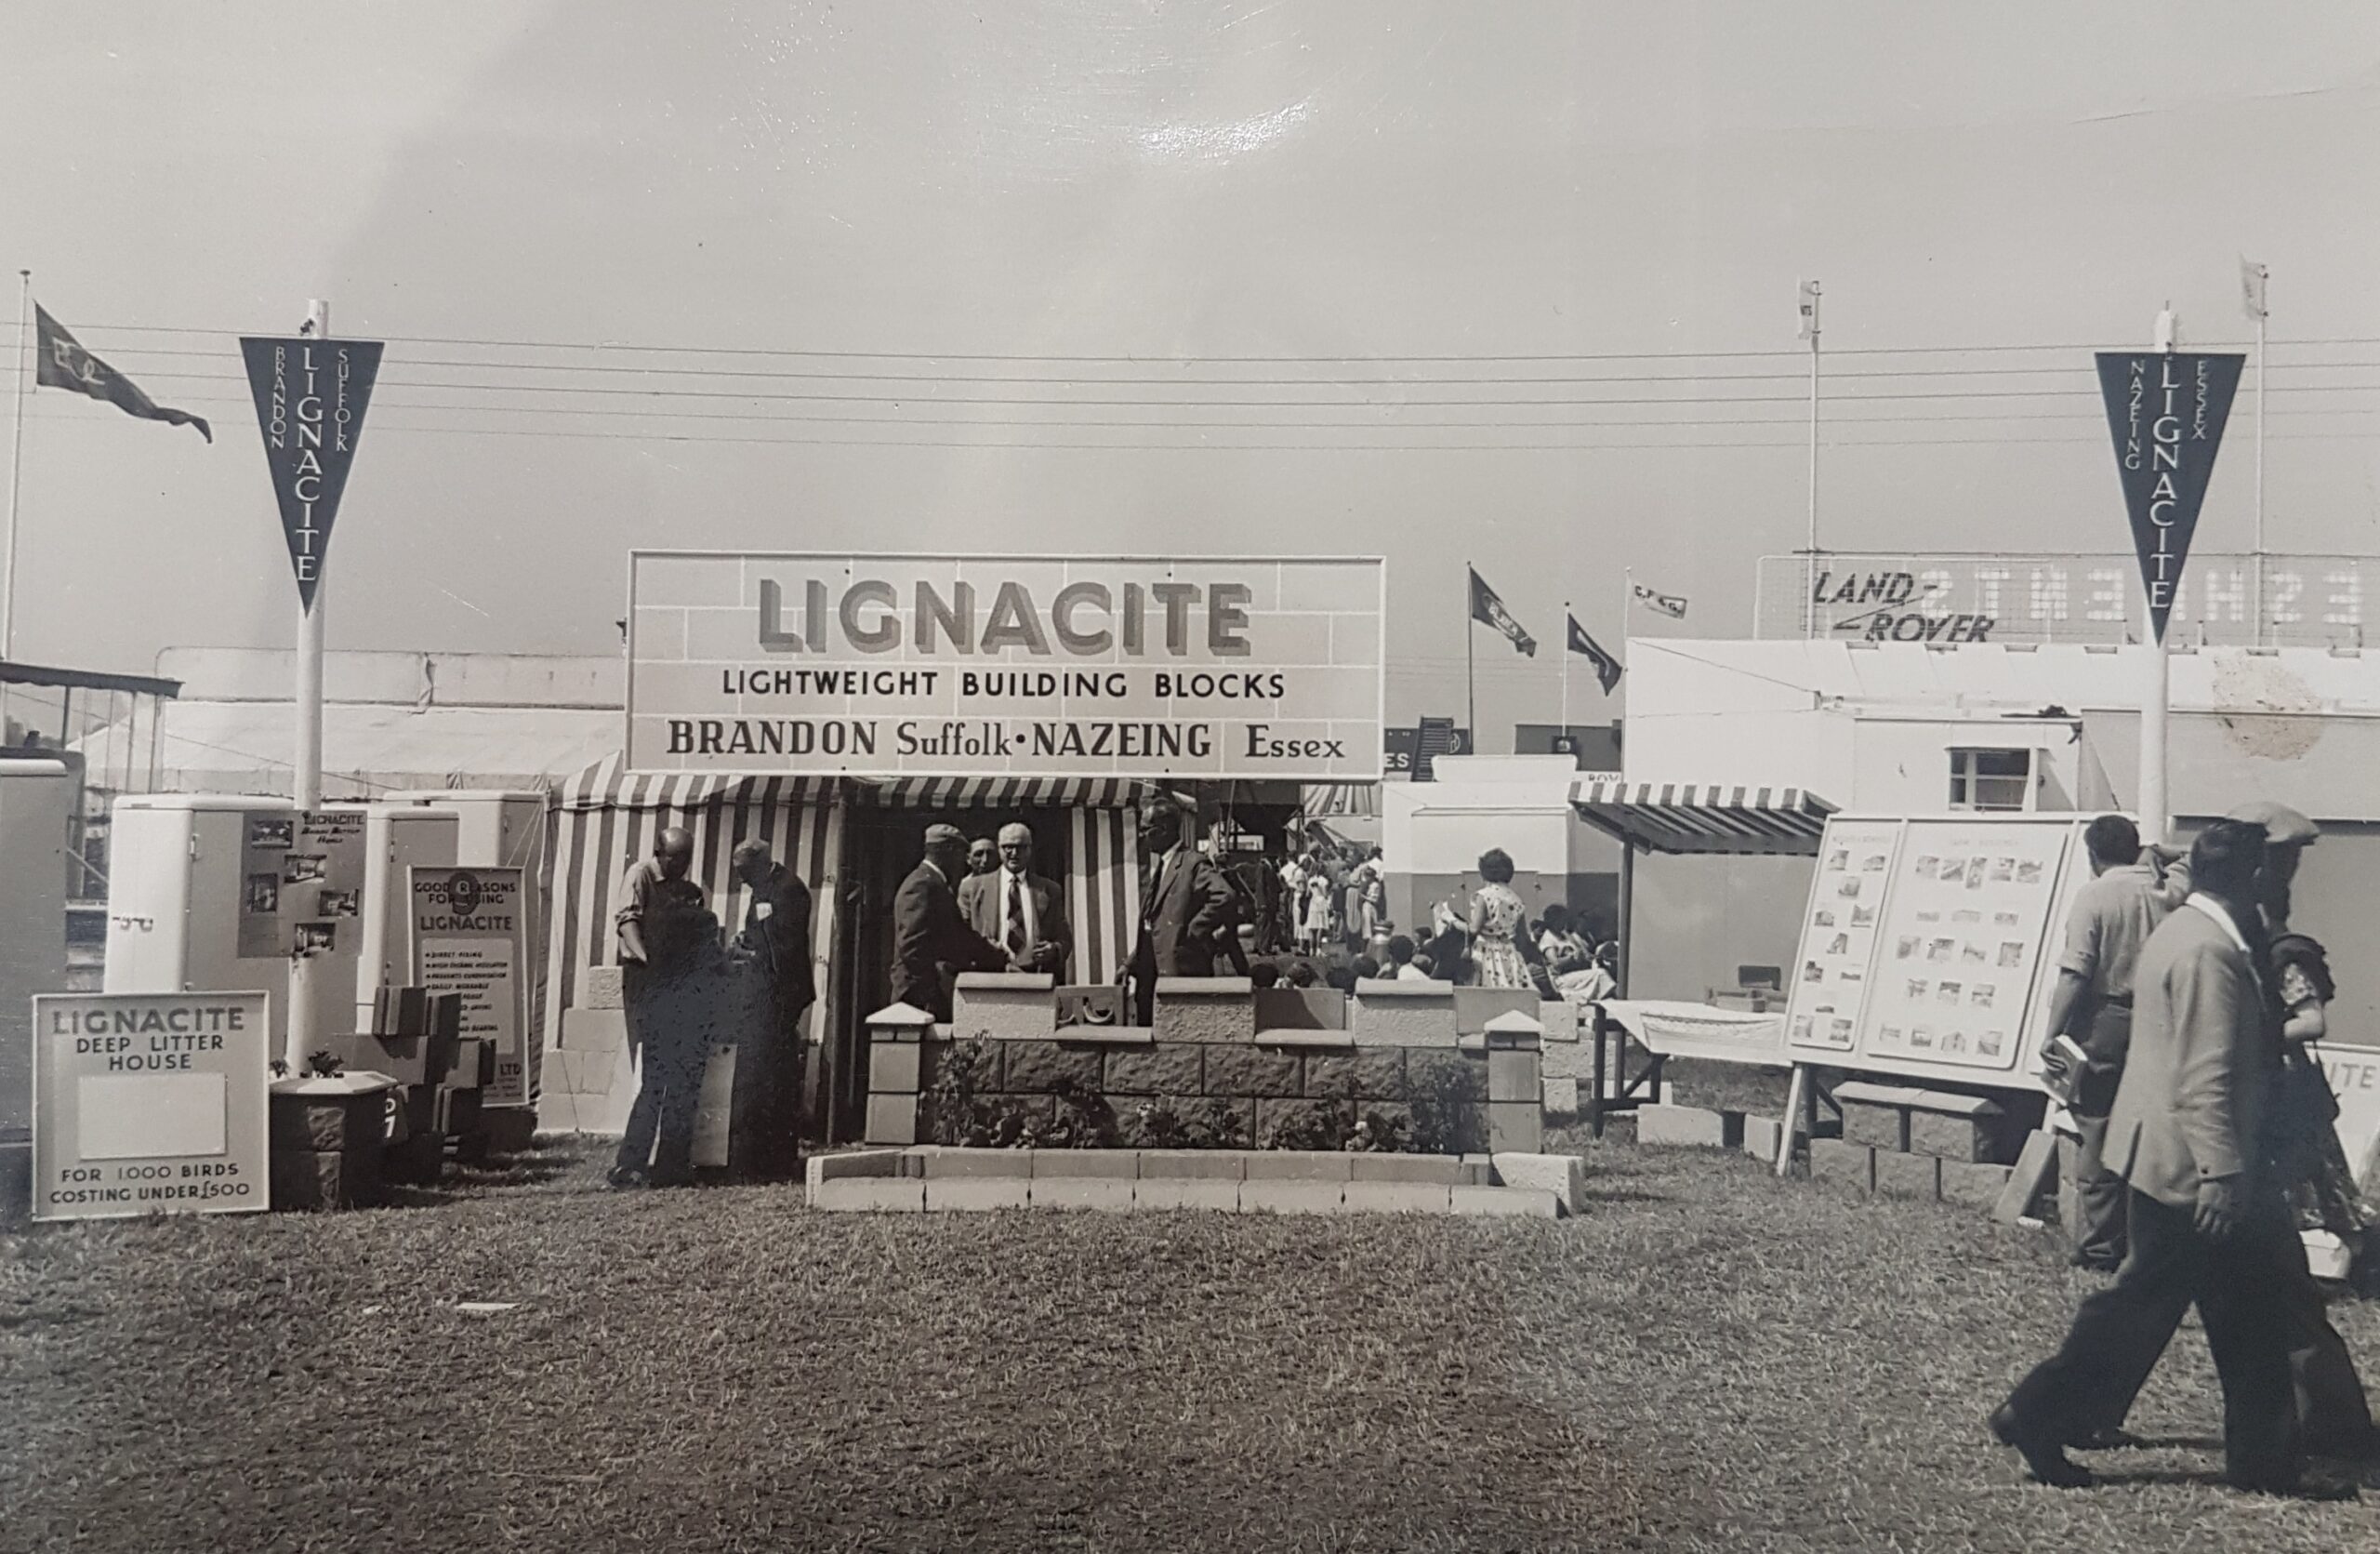 Lignacite at a Trade Fair